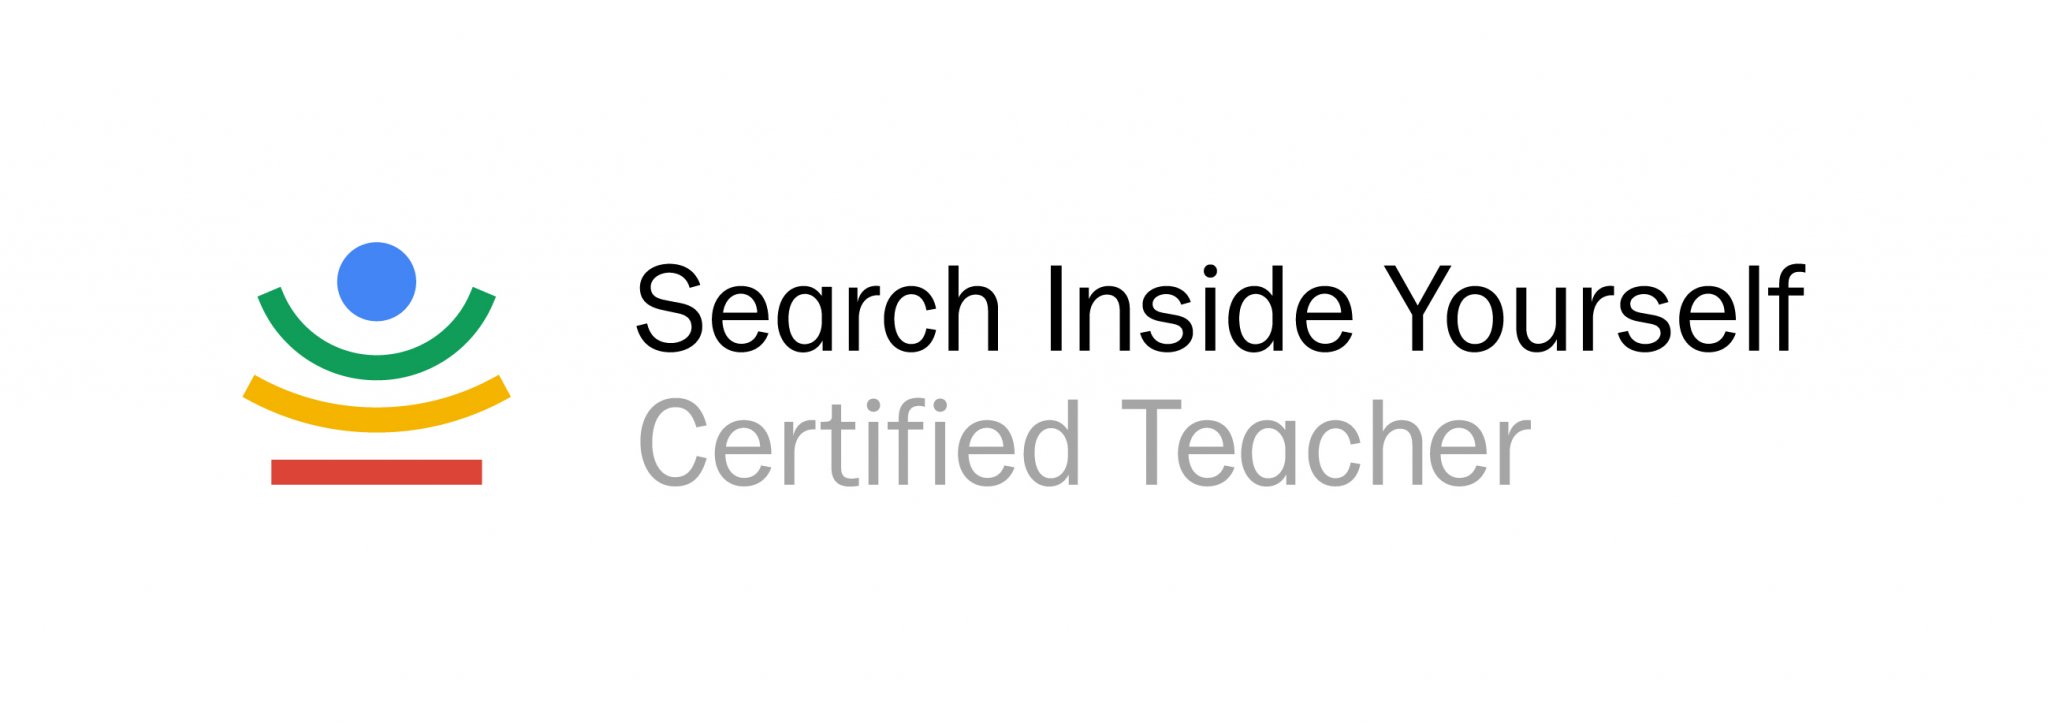 Search Inside Yourself Teacher